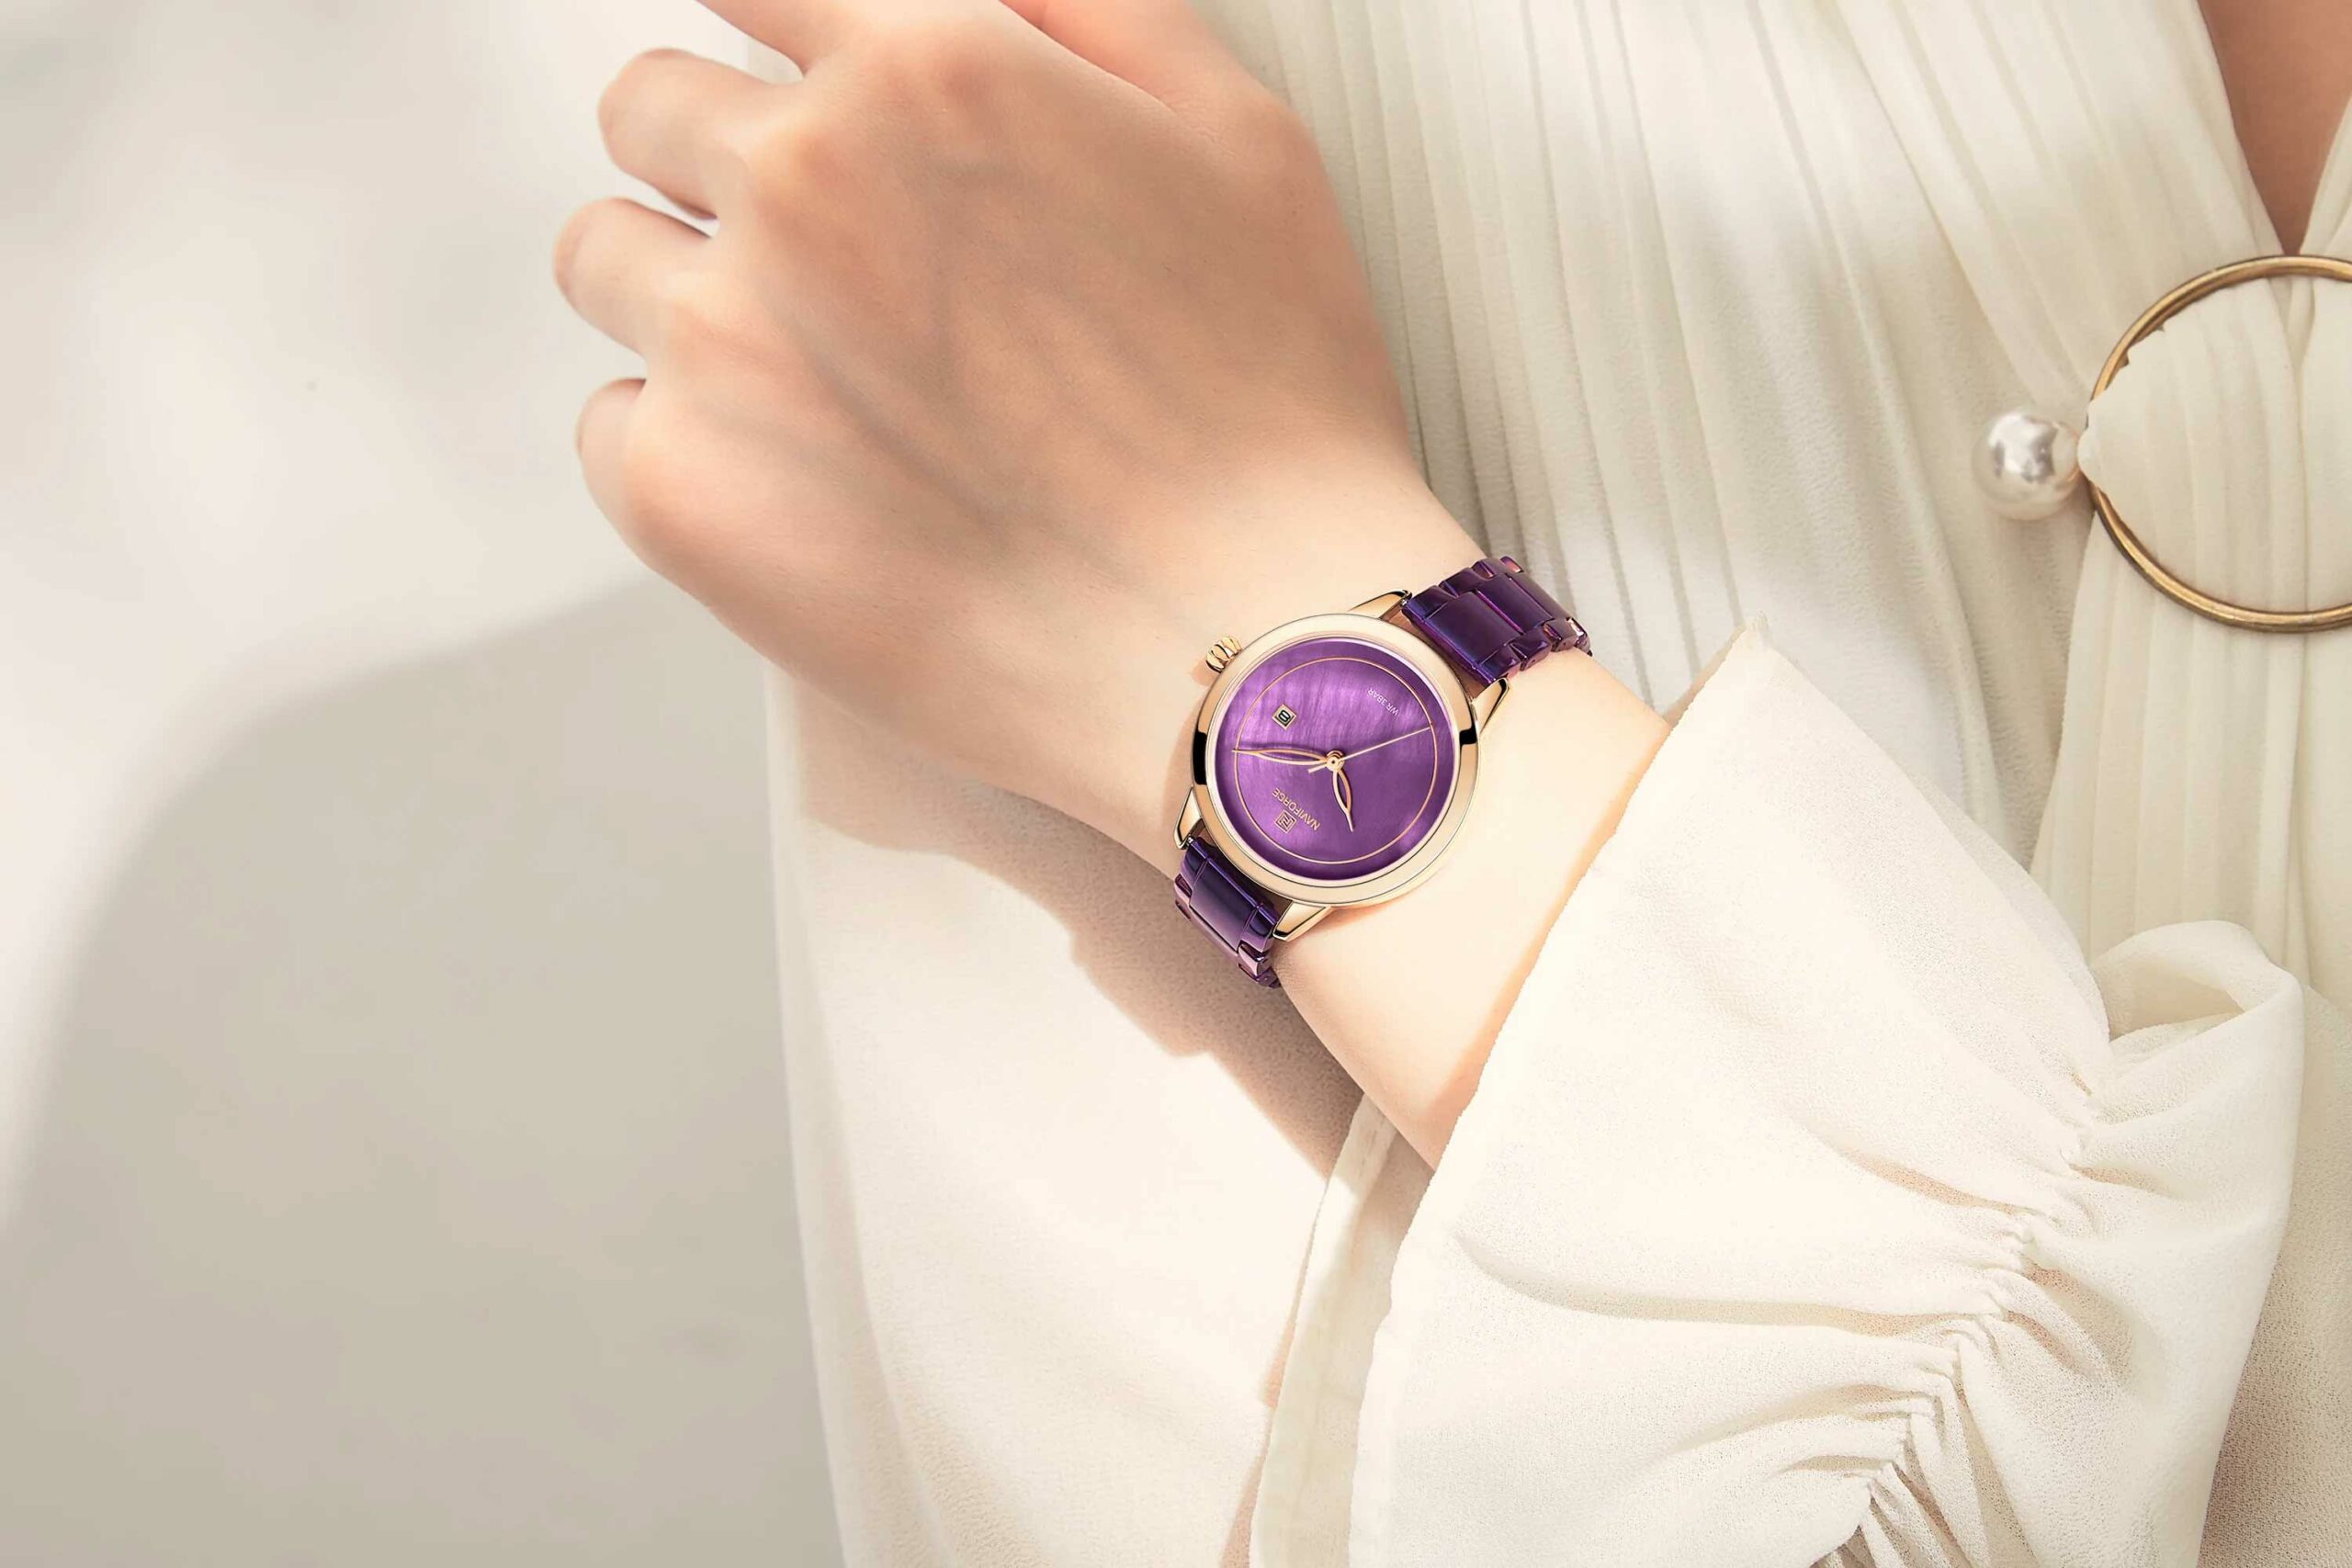 NaviForce NF5008 stylish ladies fashion watch in purple steel chain & dial model display